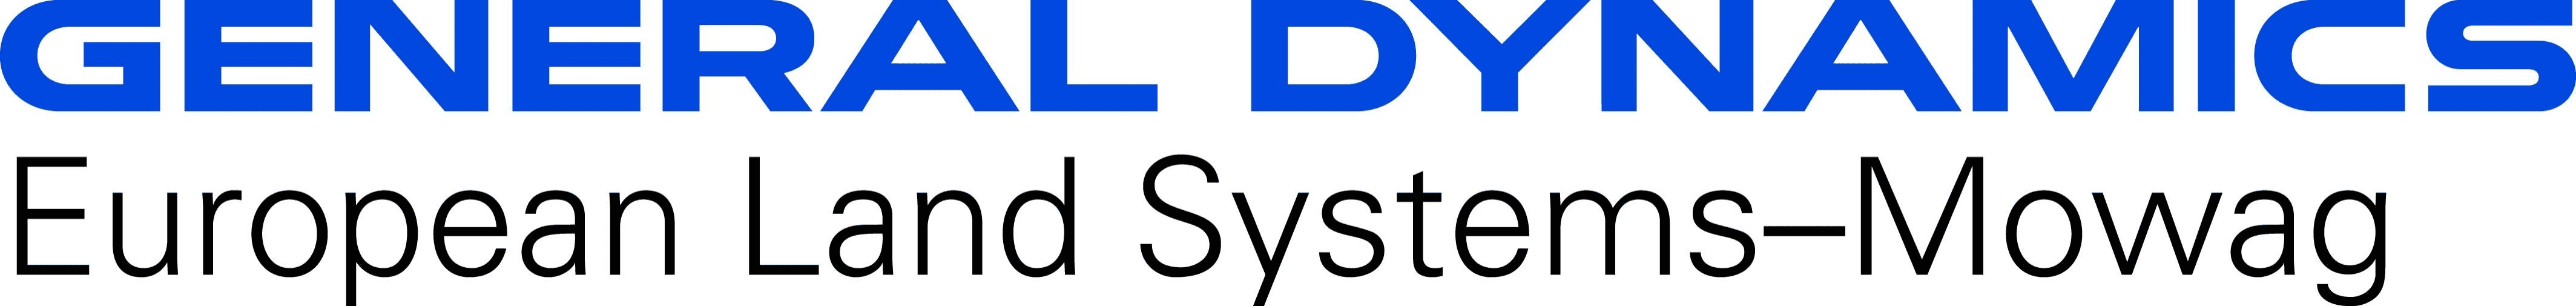 General Dynamics European Land Systems-Mowag GmbH